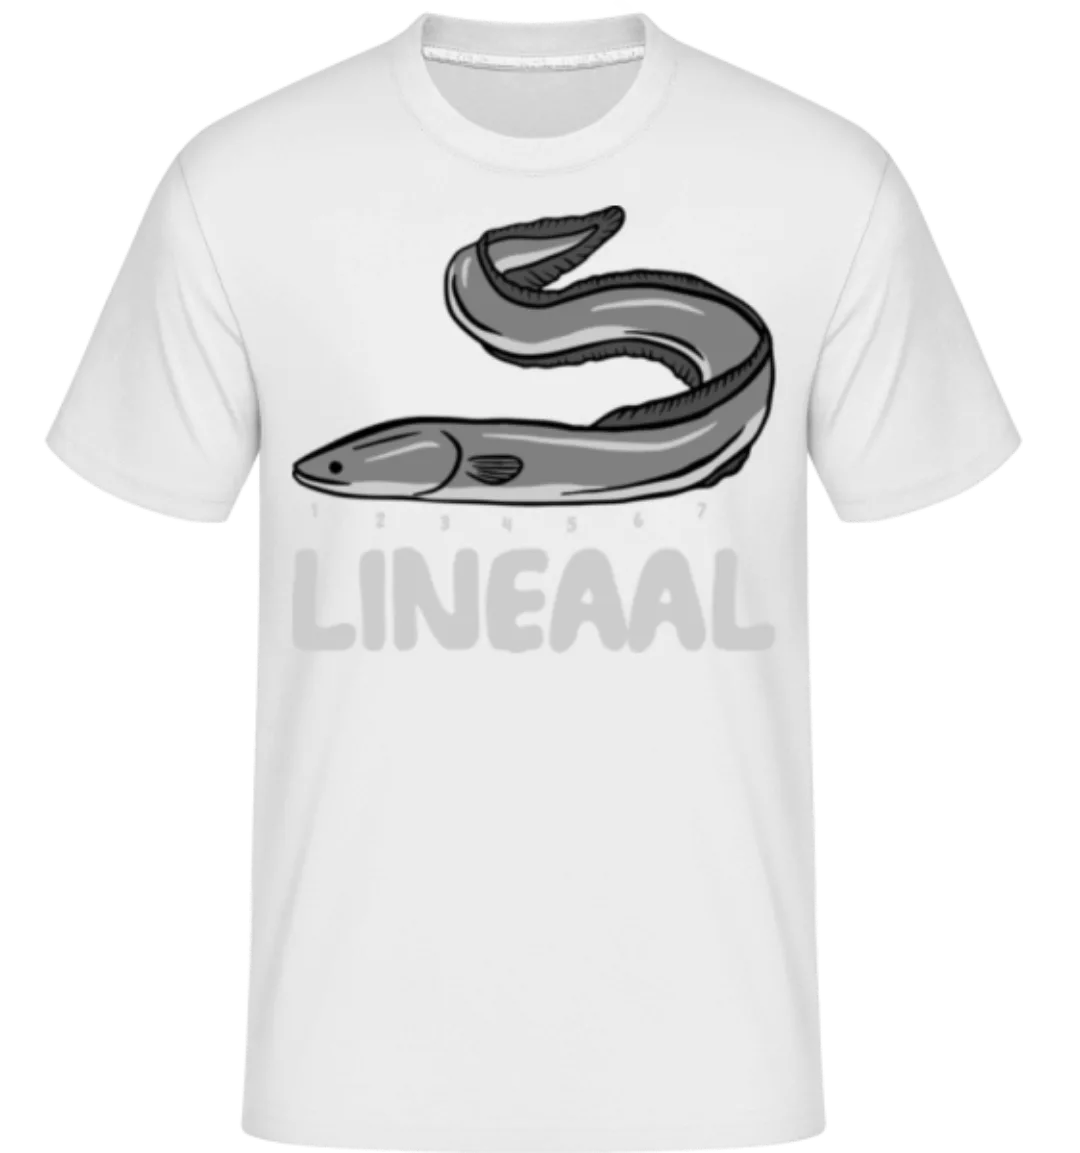 Lineaal · Shirtinator Männer T-Shirt günstig online kaufen